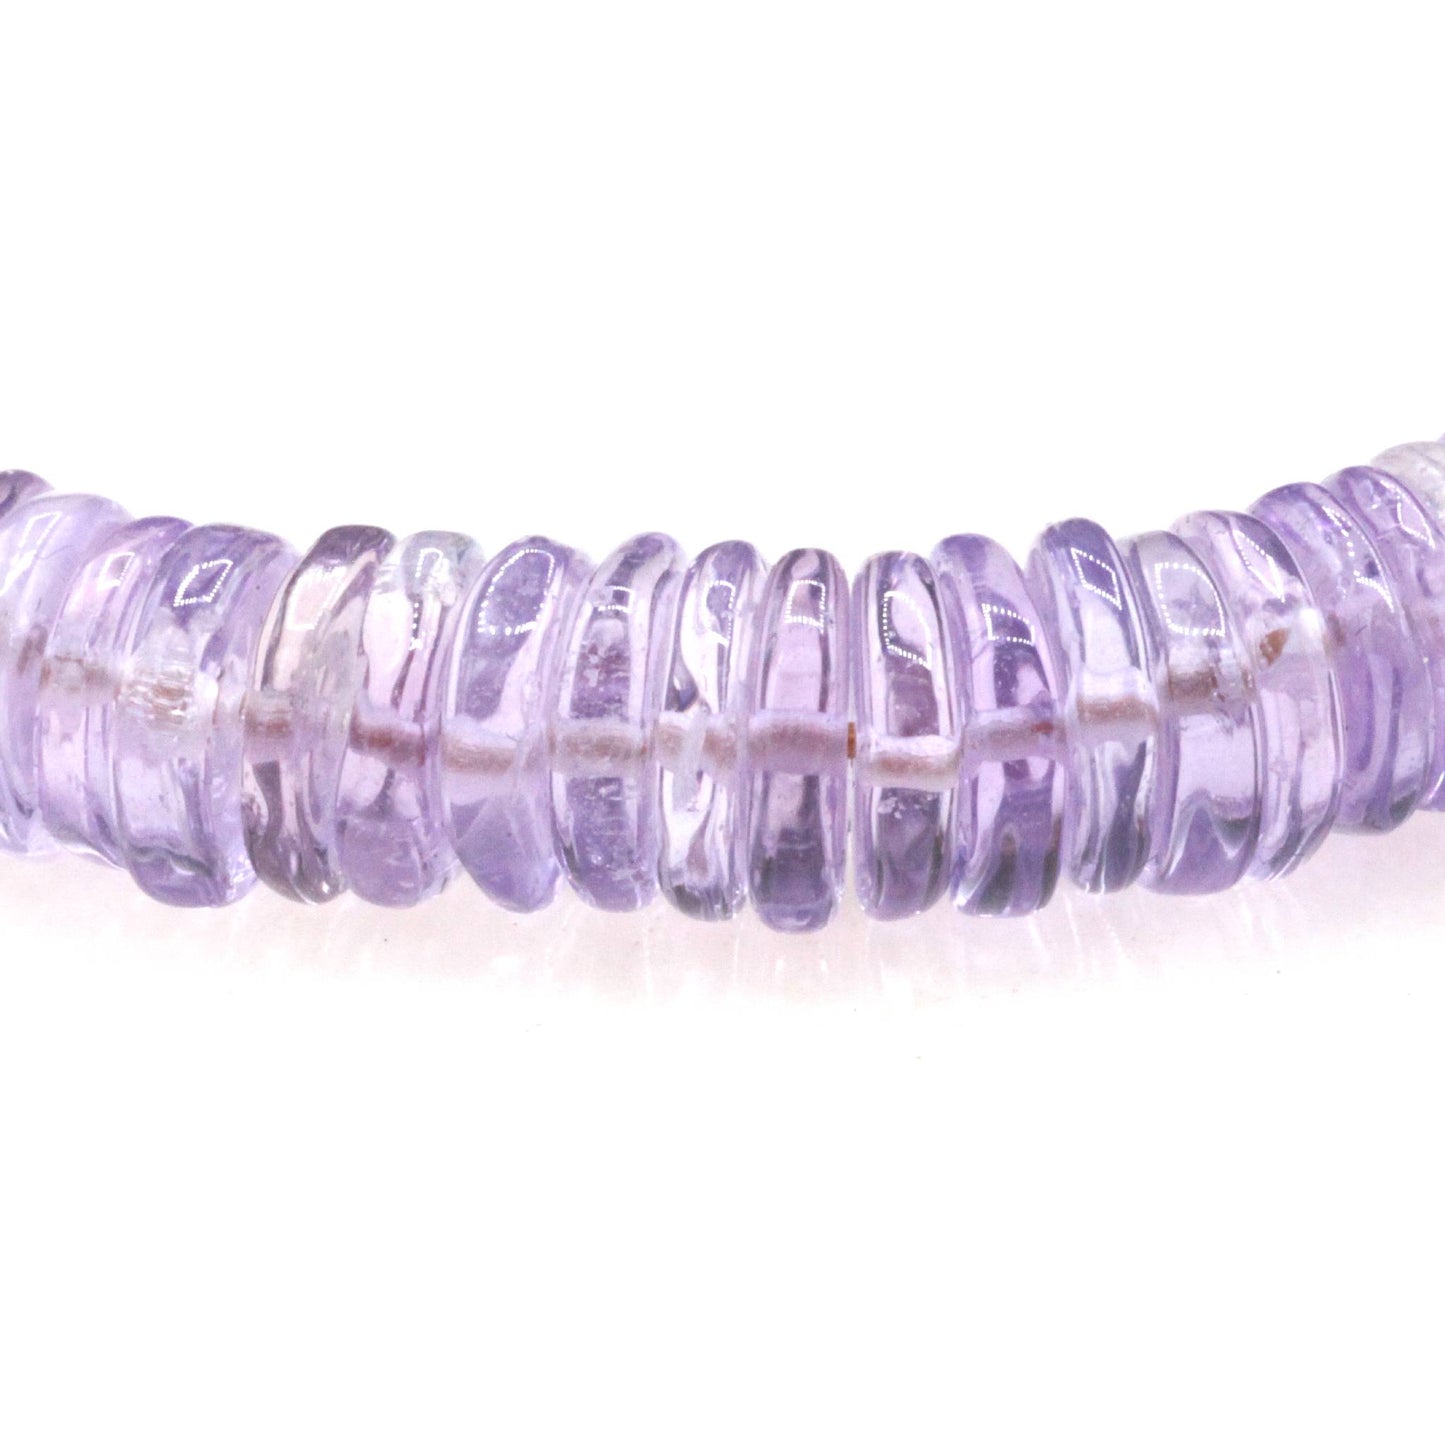 Lena Skadegard Jewels | Purple Amethyst Gemstone Tassel Bracelet | Firecracker